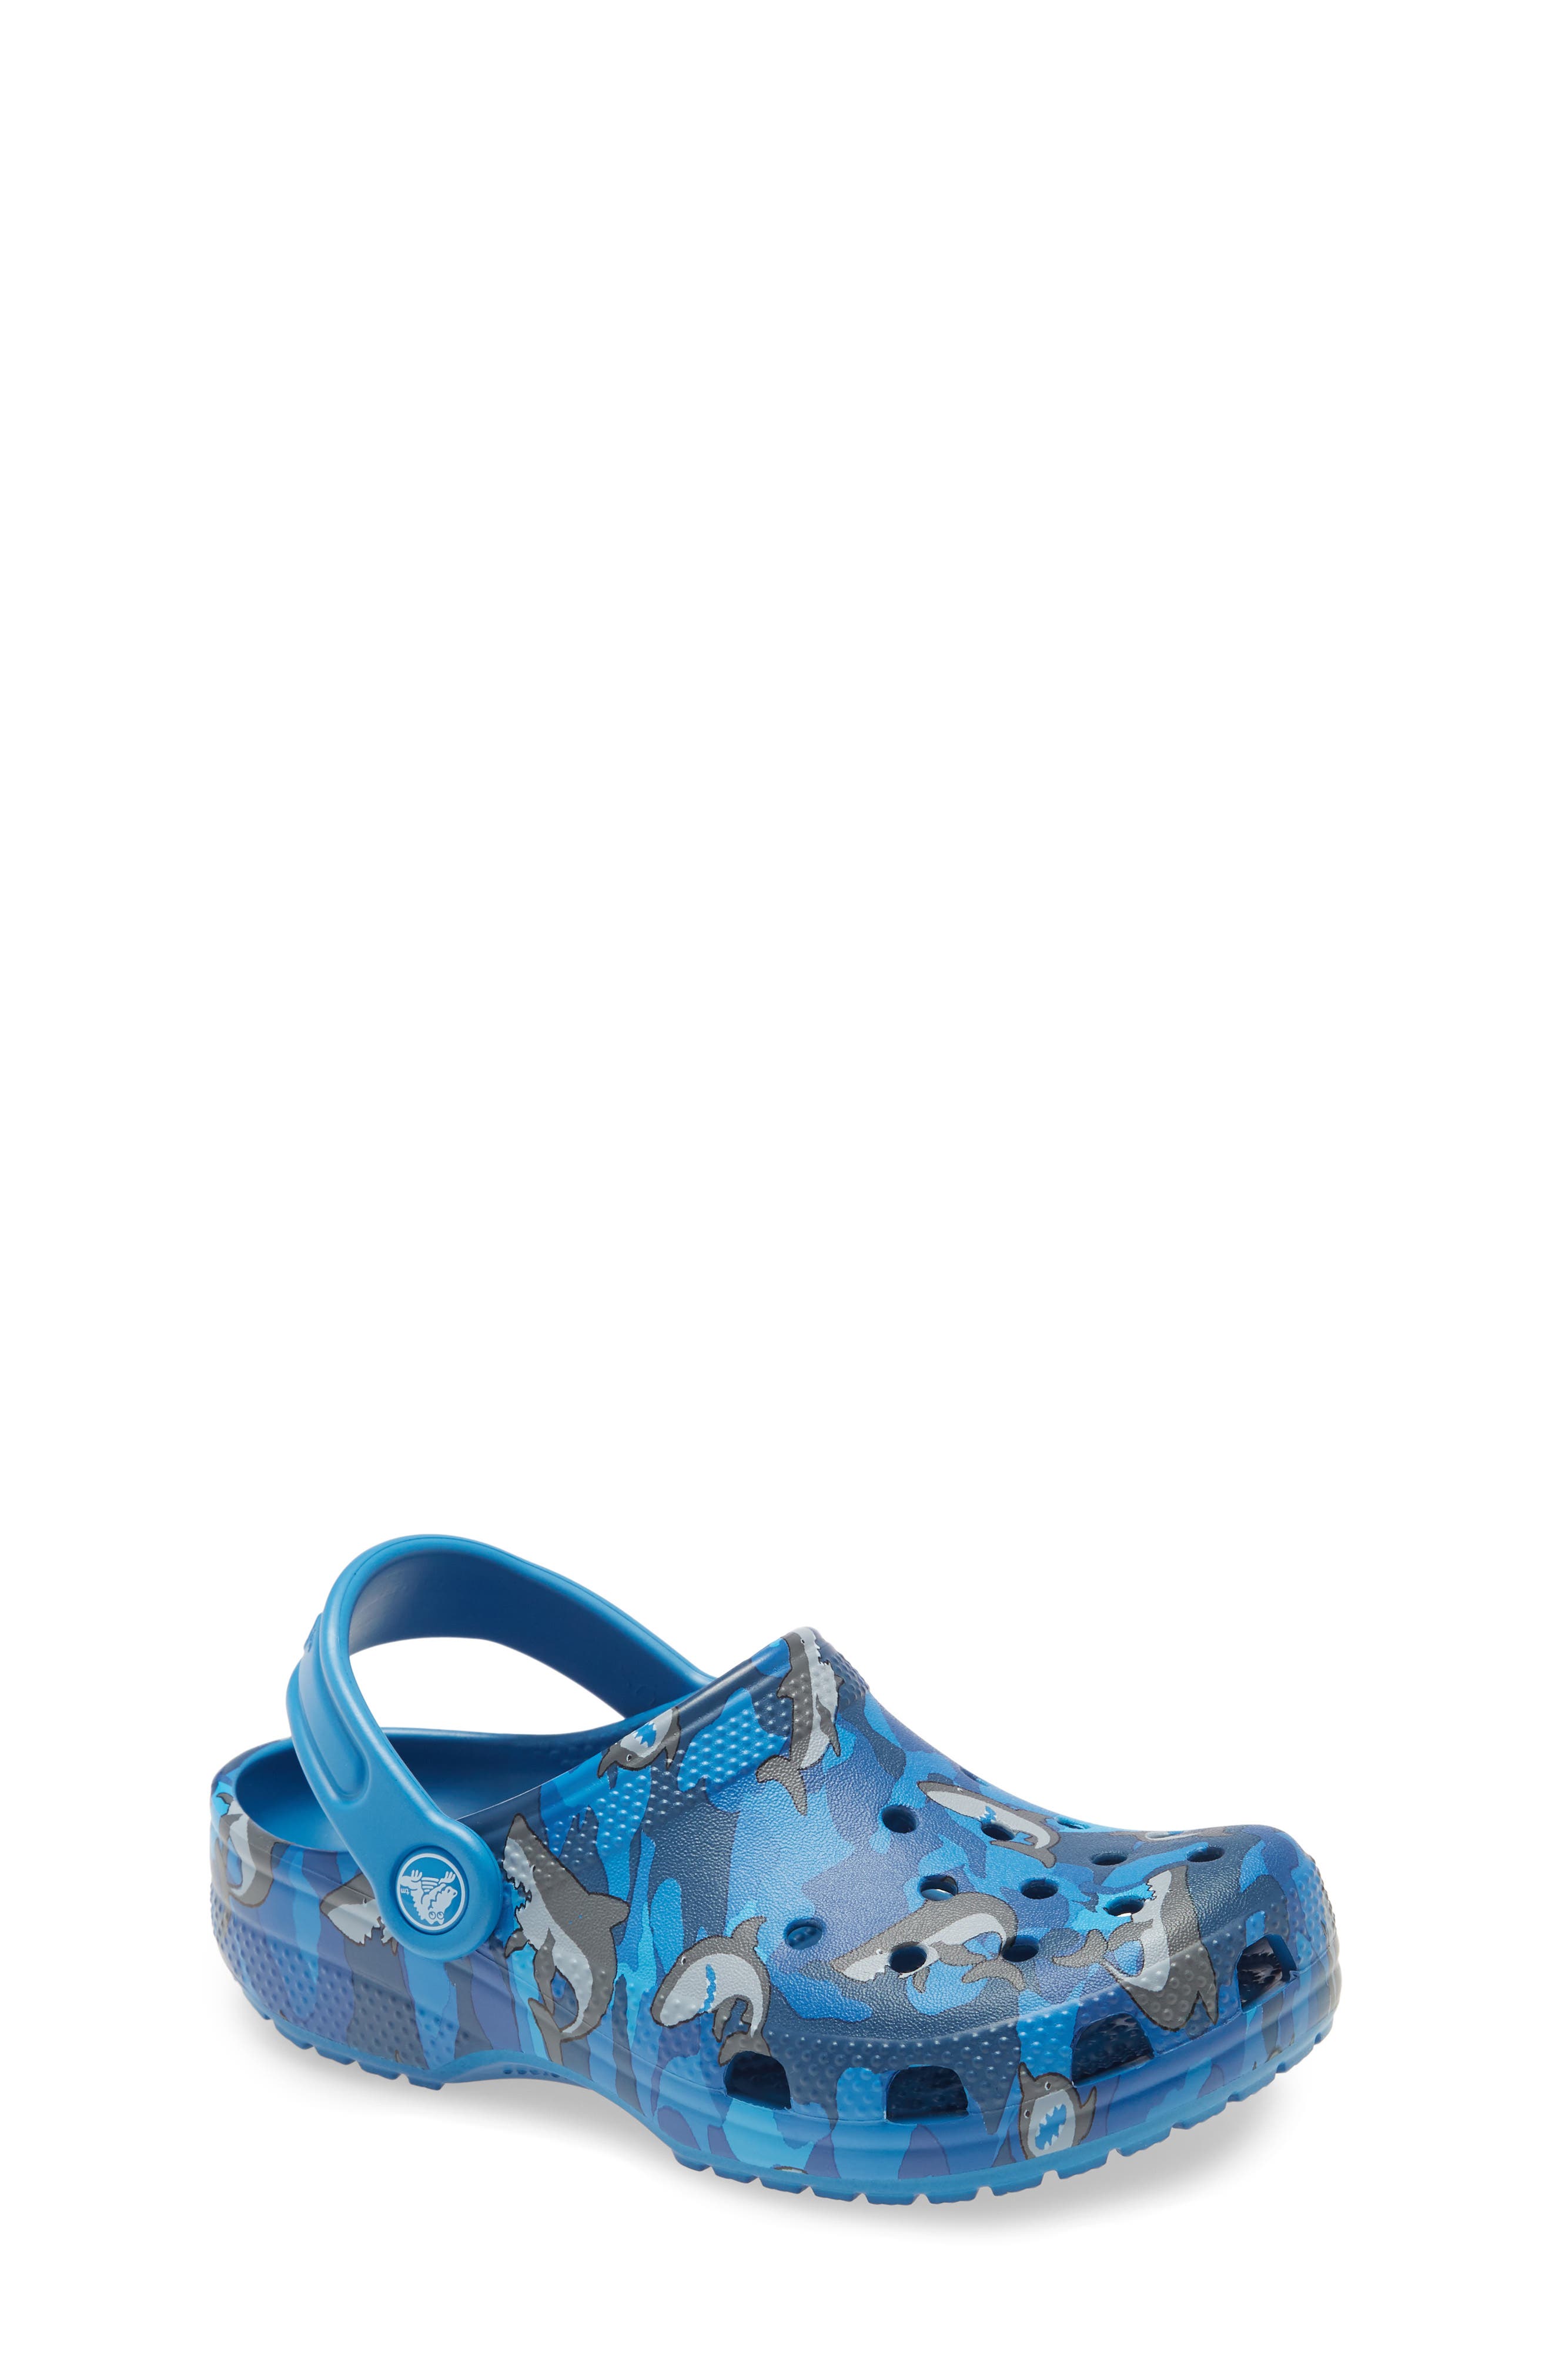 powder blue crocs